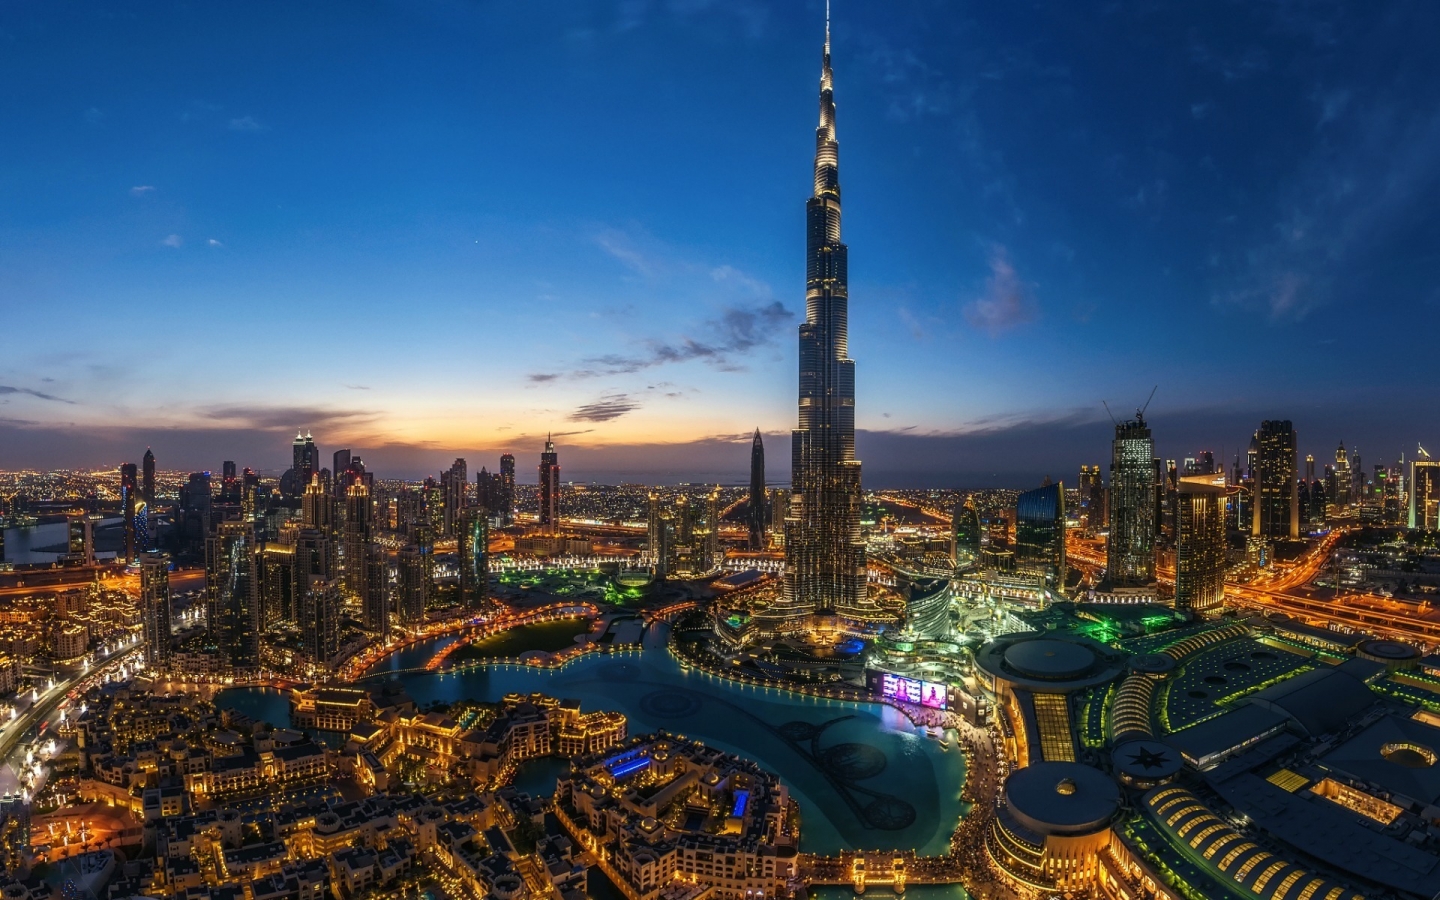 Night Lights in Dubai for 1440 x 900 widescreen resolution